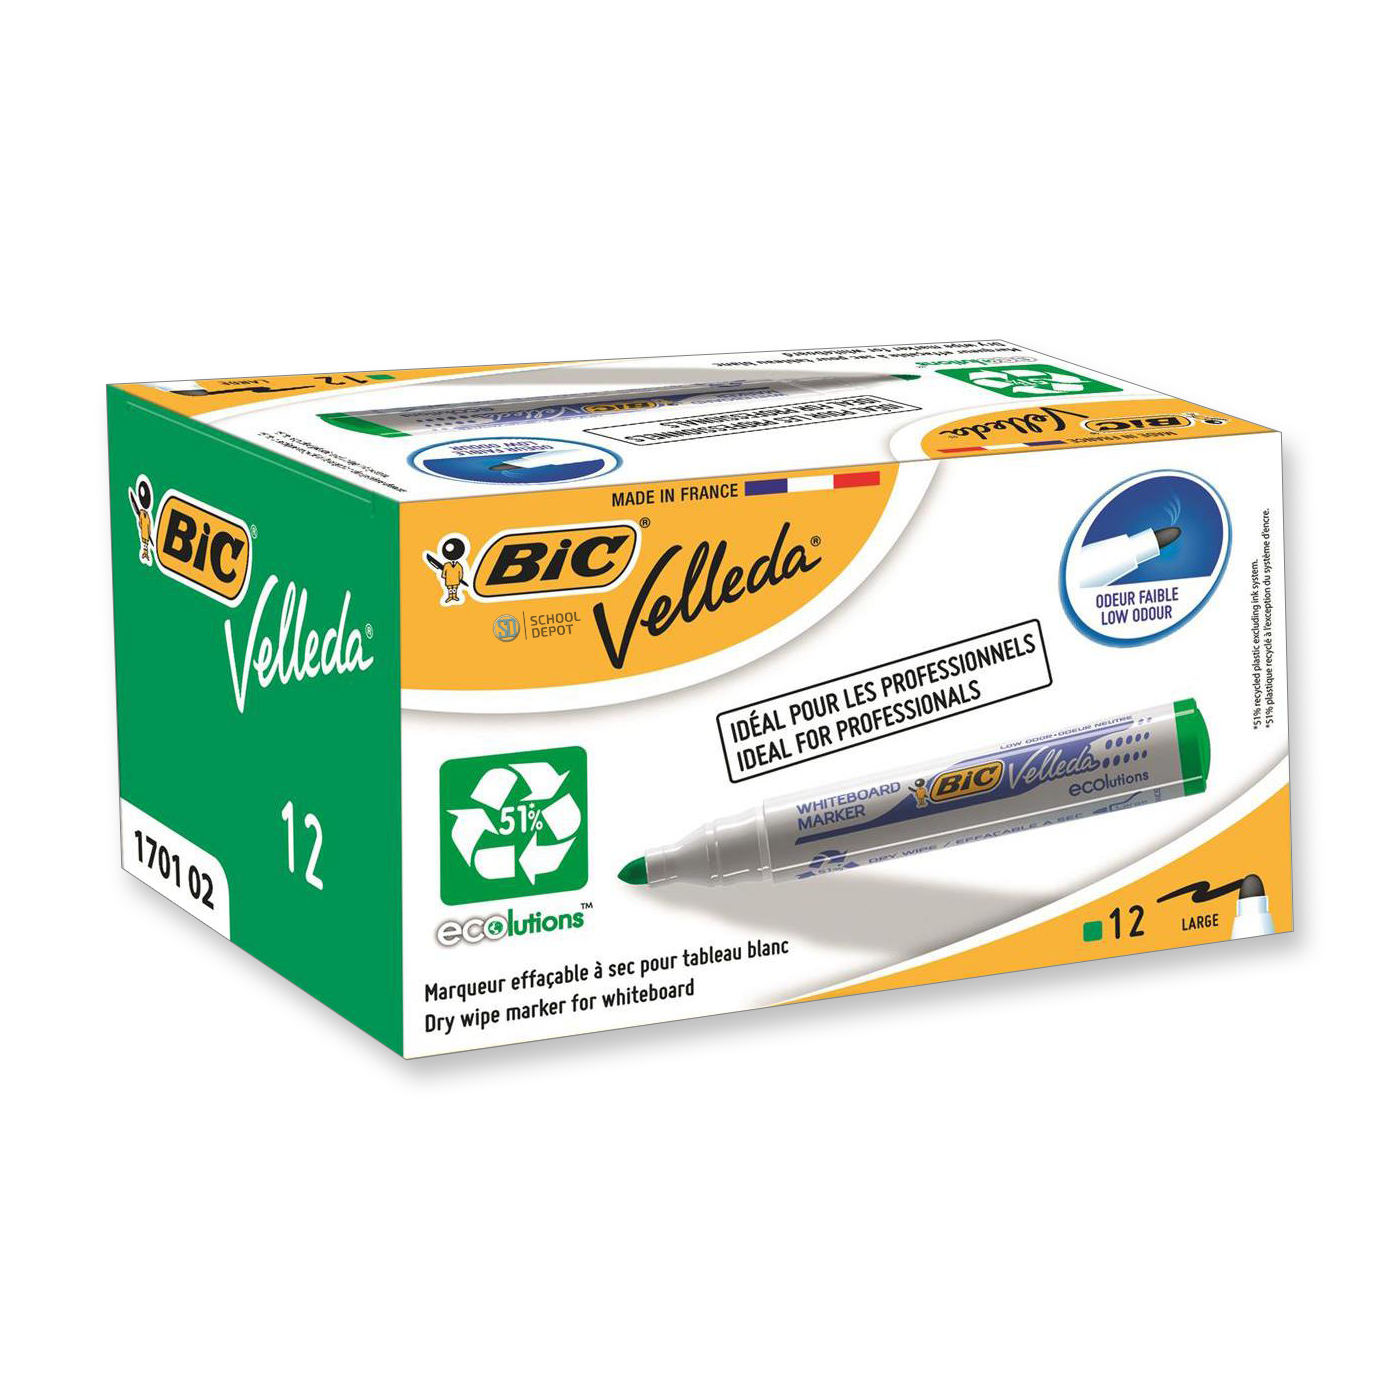 BIC Whiteboard Marker Velleda Ecolutions Bullet Tip Green Box of 12